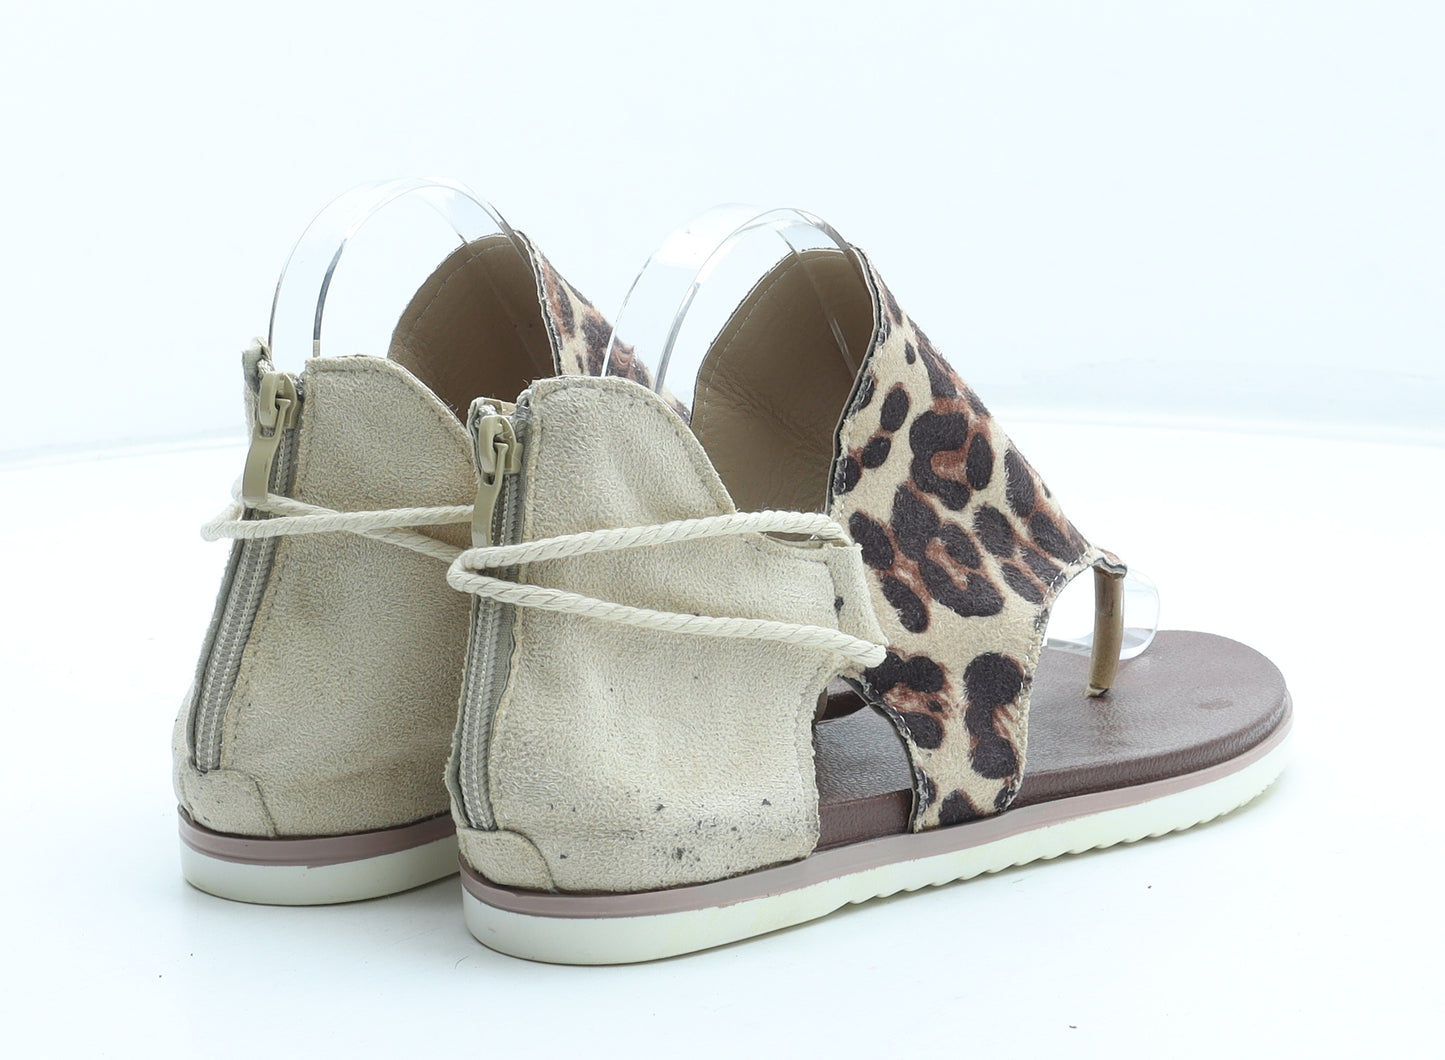 Preworn Womens Brown Animal Print Leather Thong Sandal UK - Estimated UK Size 6 Leopard Pattern